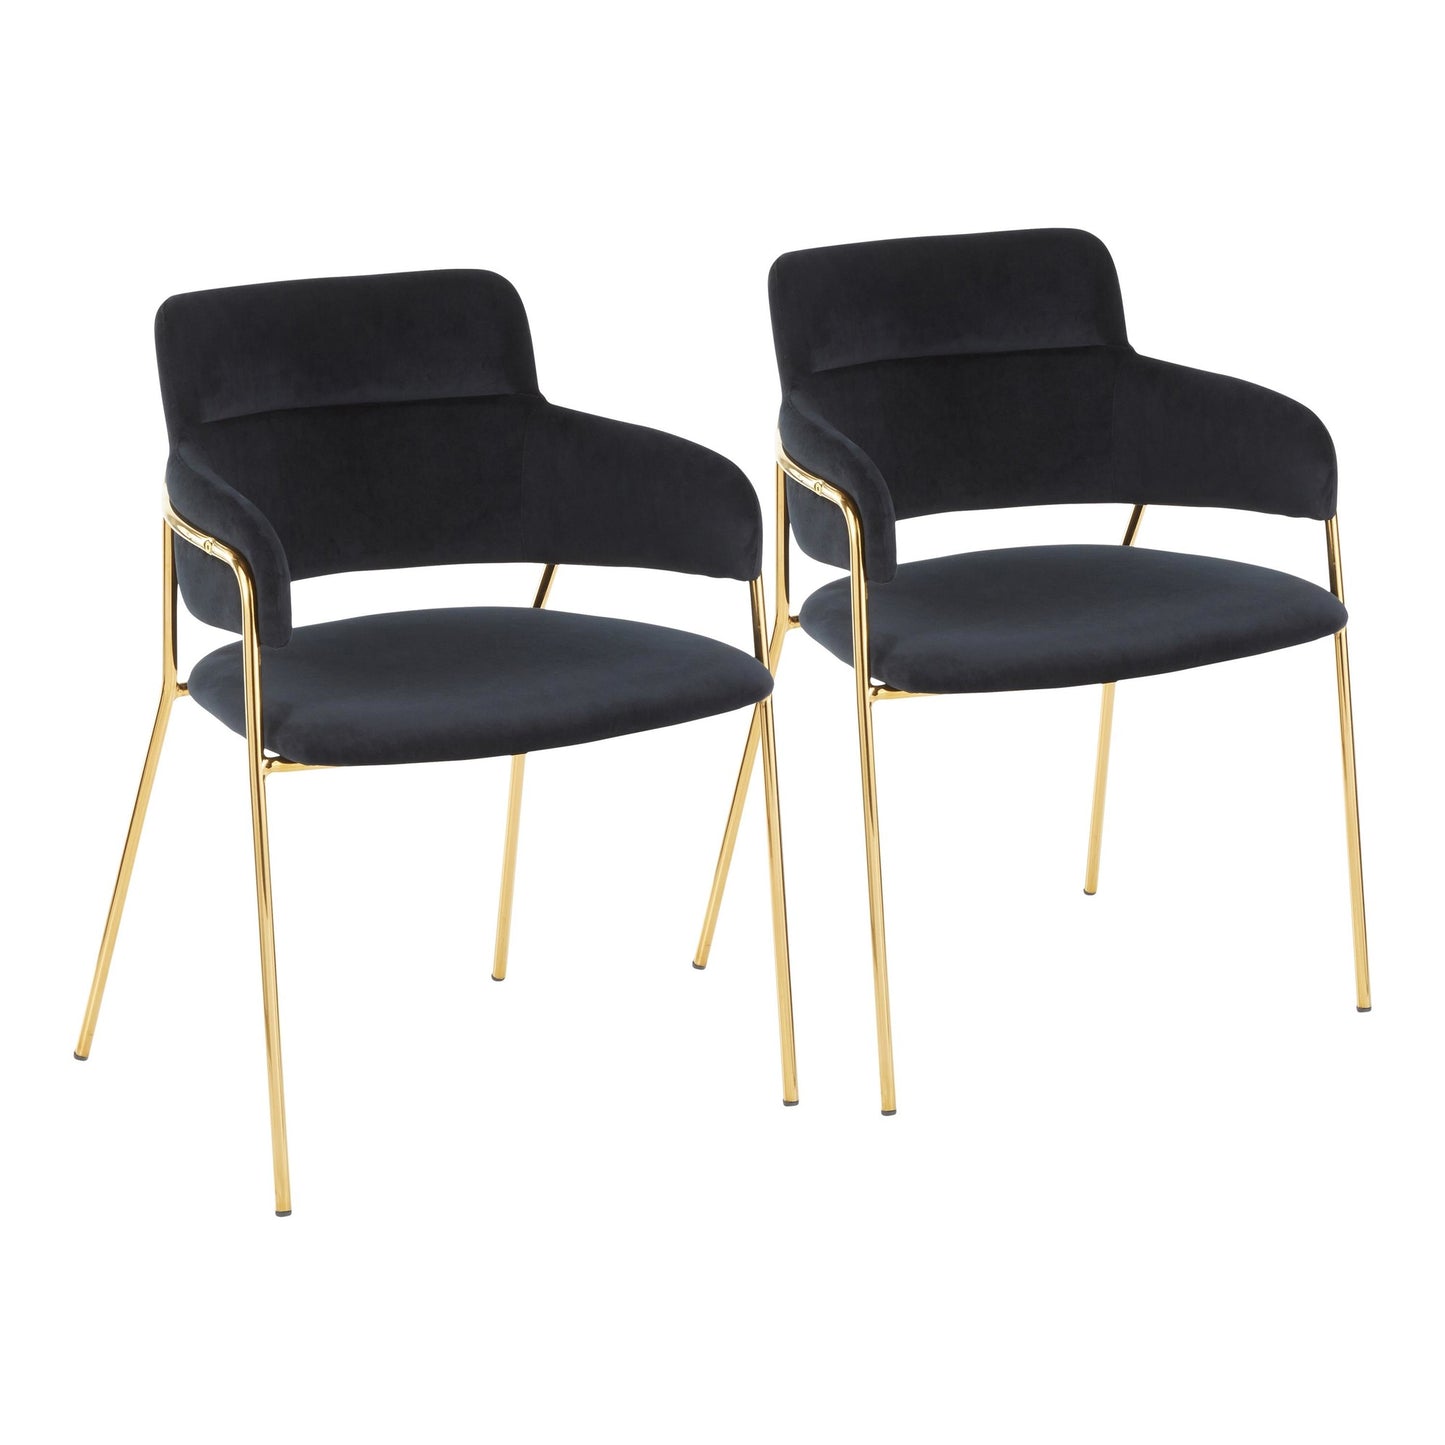 LumiSource Napoli Chair - Set of 2-6